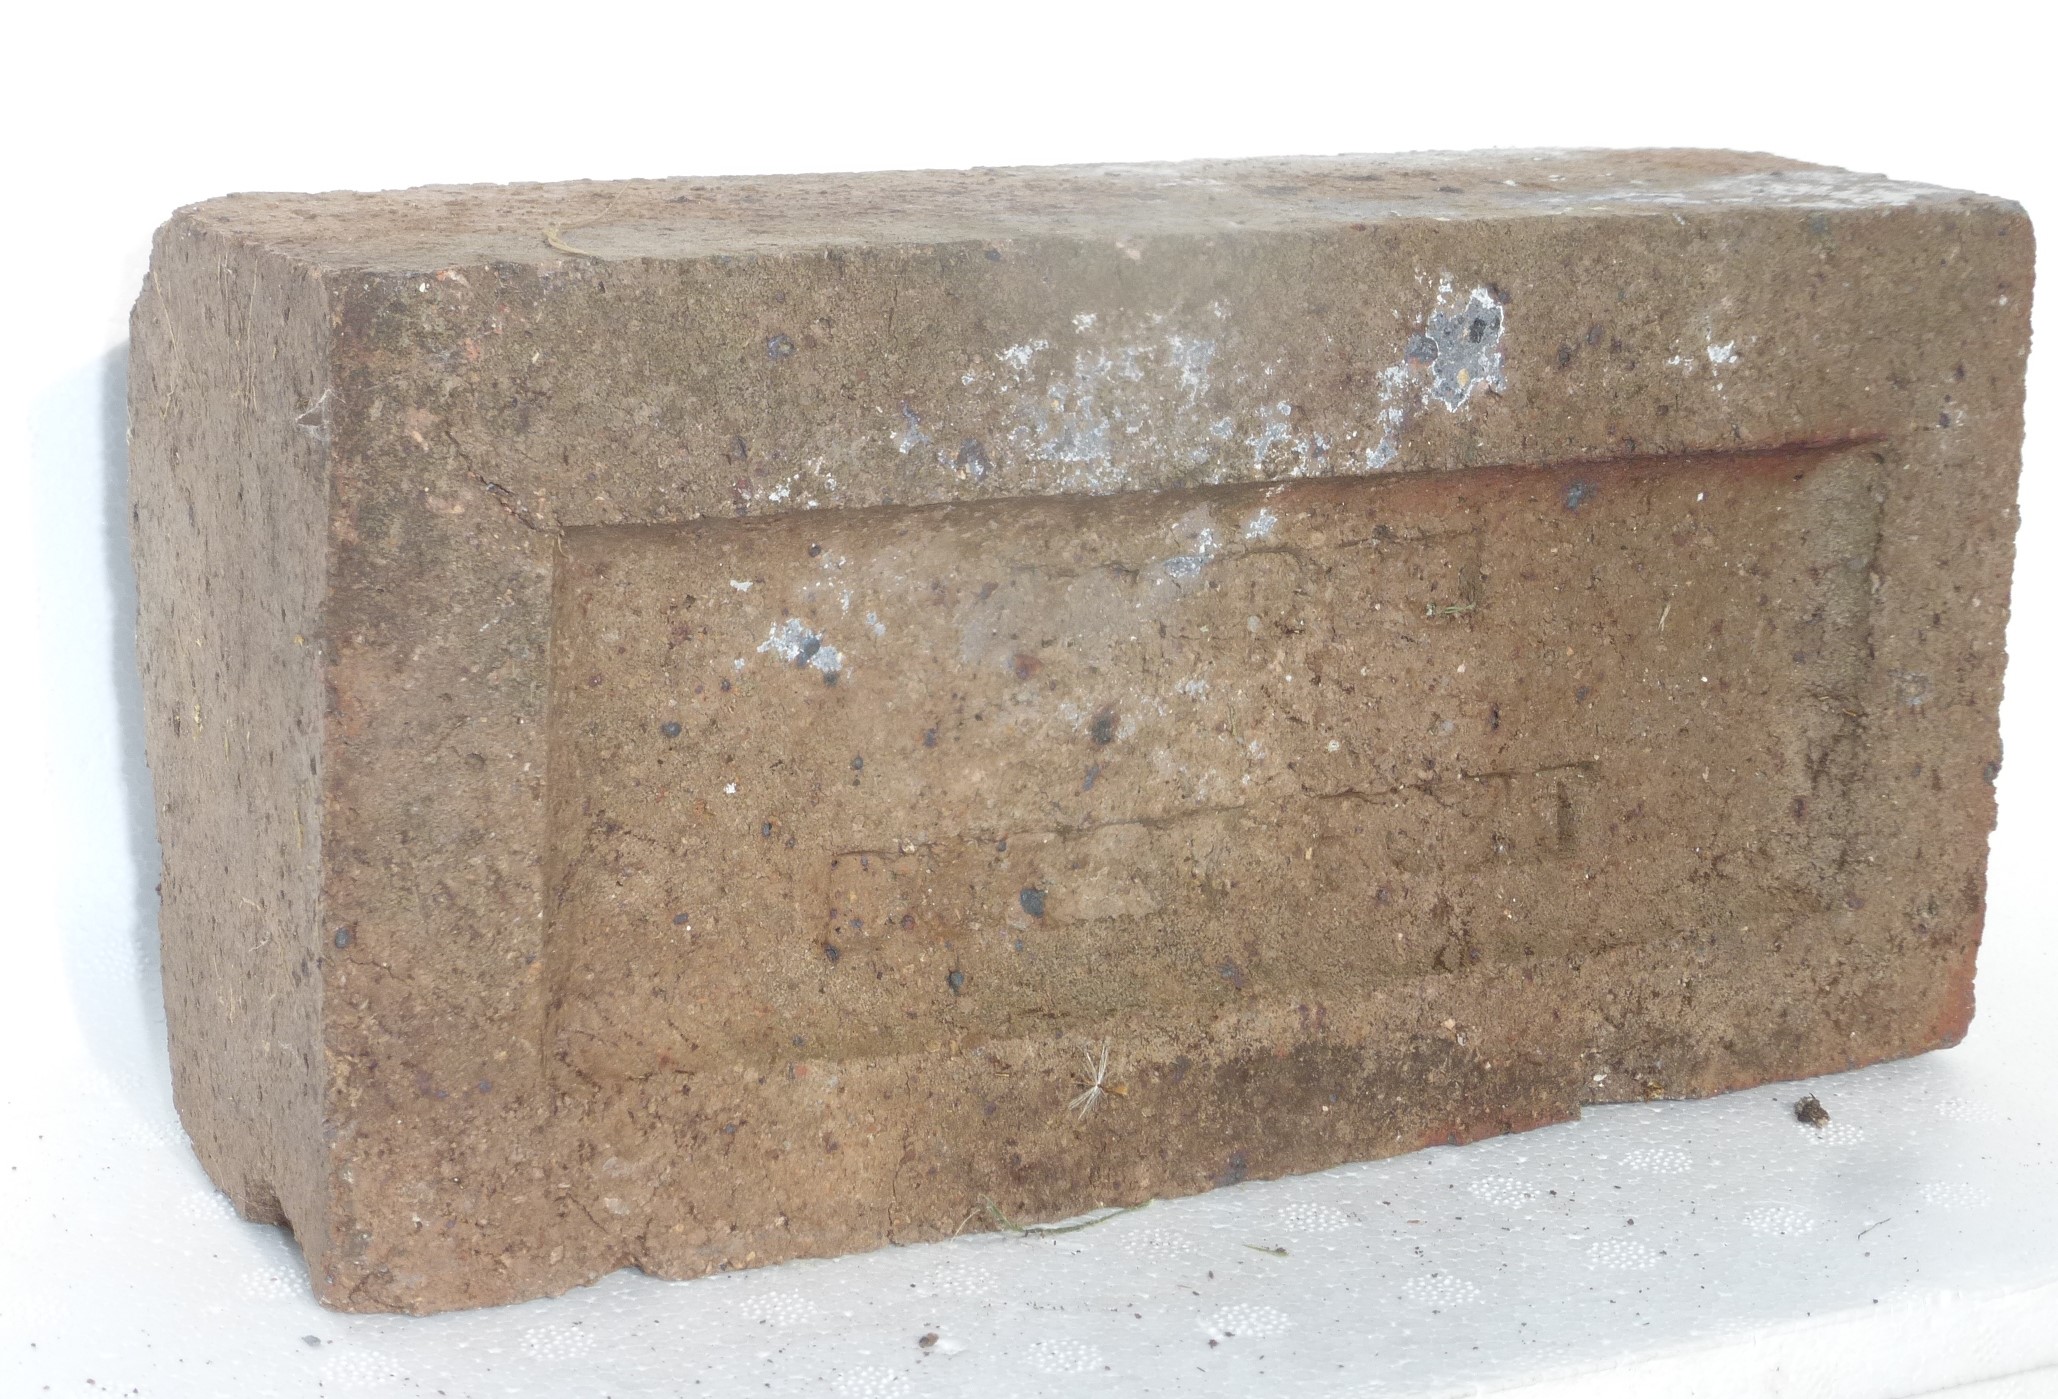 Brick from Burry Port Achddu brickworks
Courtesy Hugh Owen